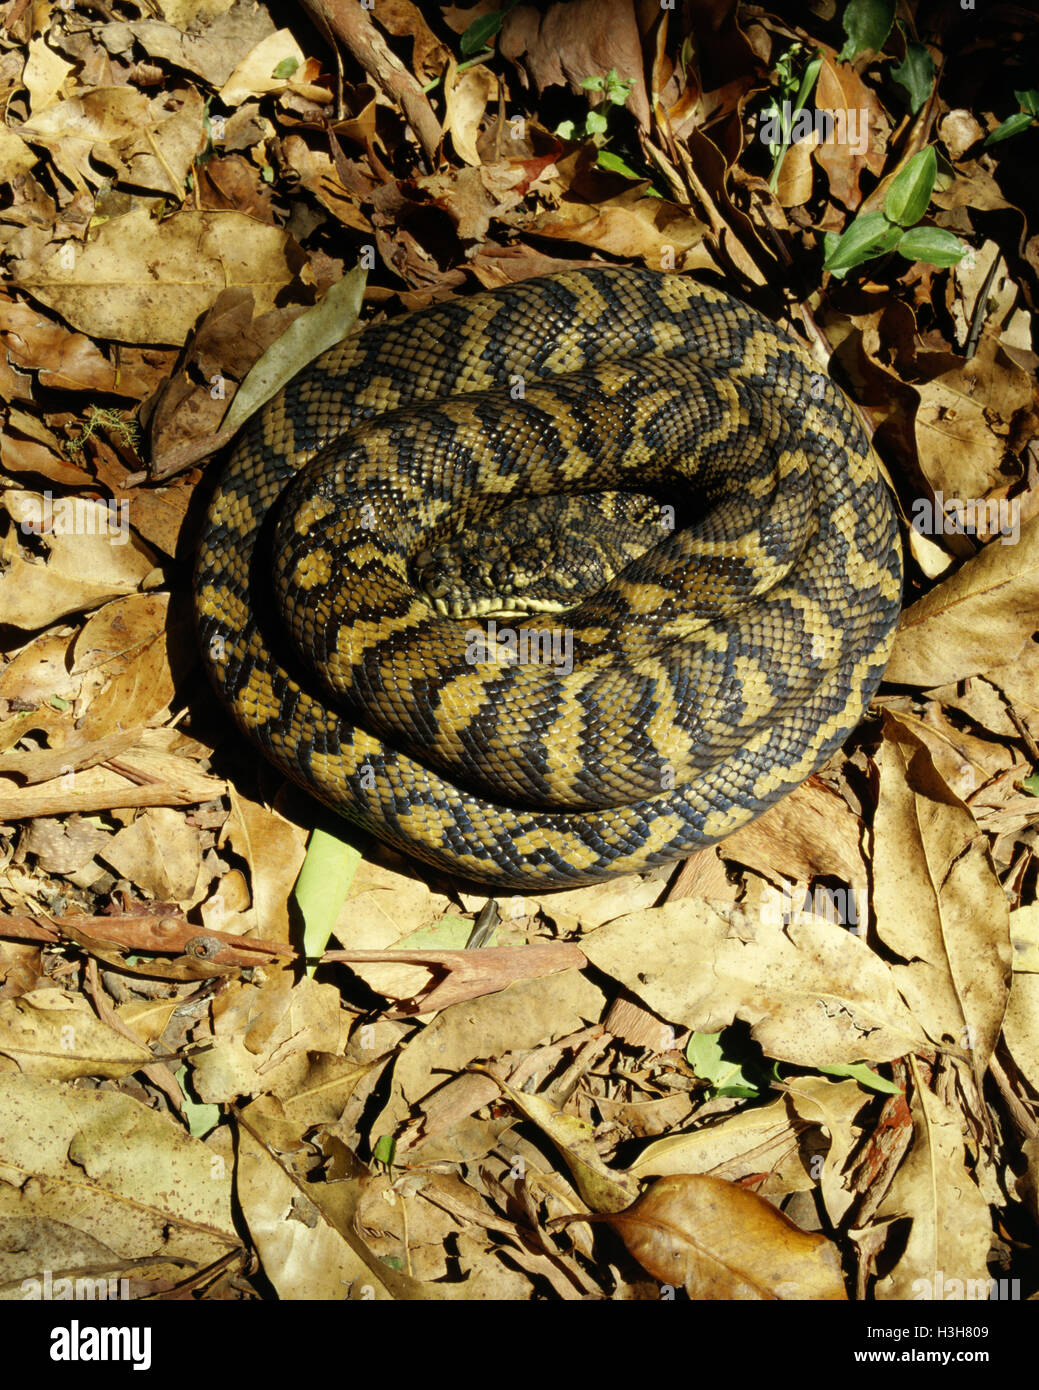 Carpet python (Morelia spilota Stock Photo - Alamy